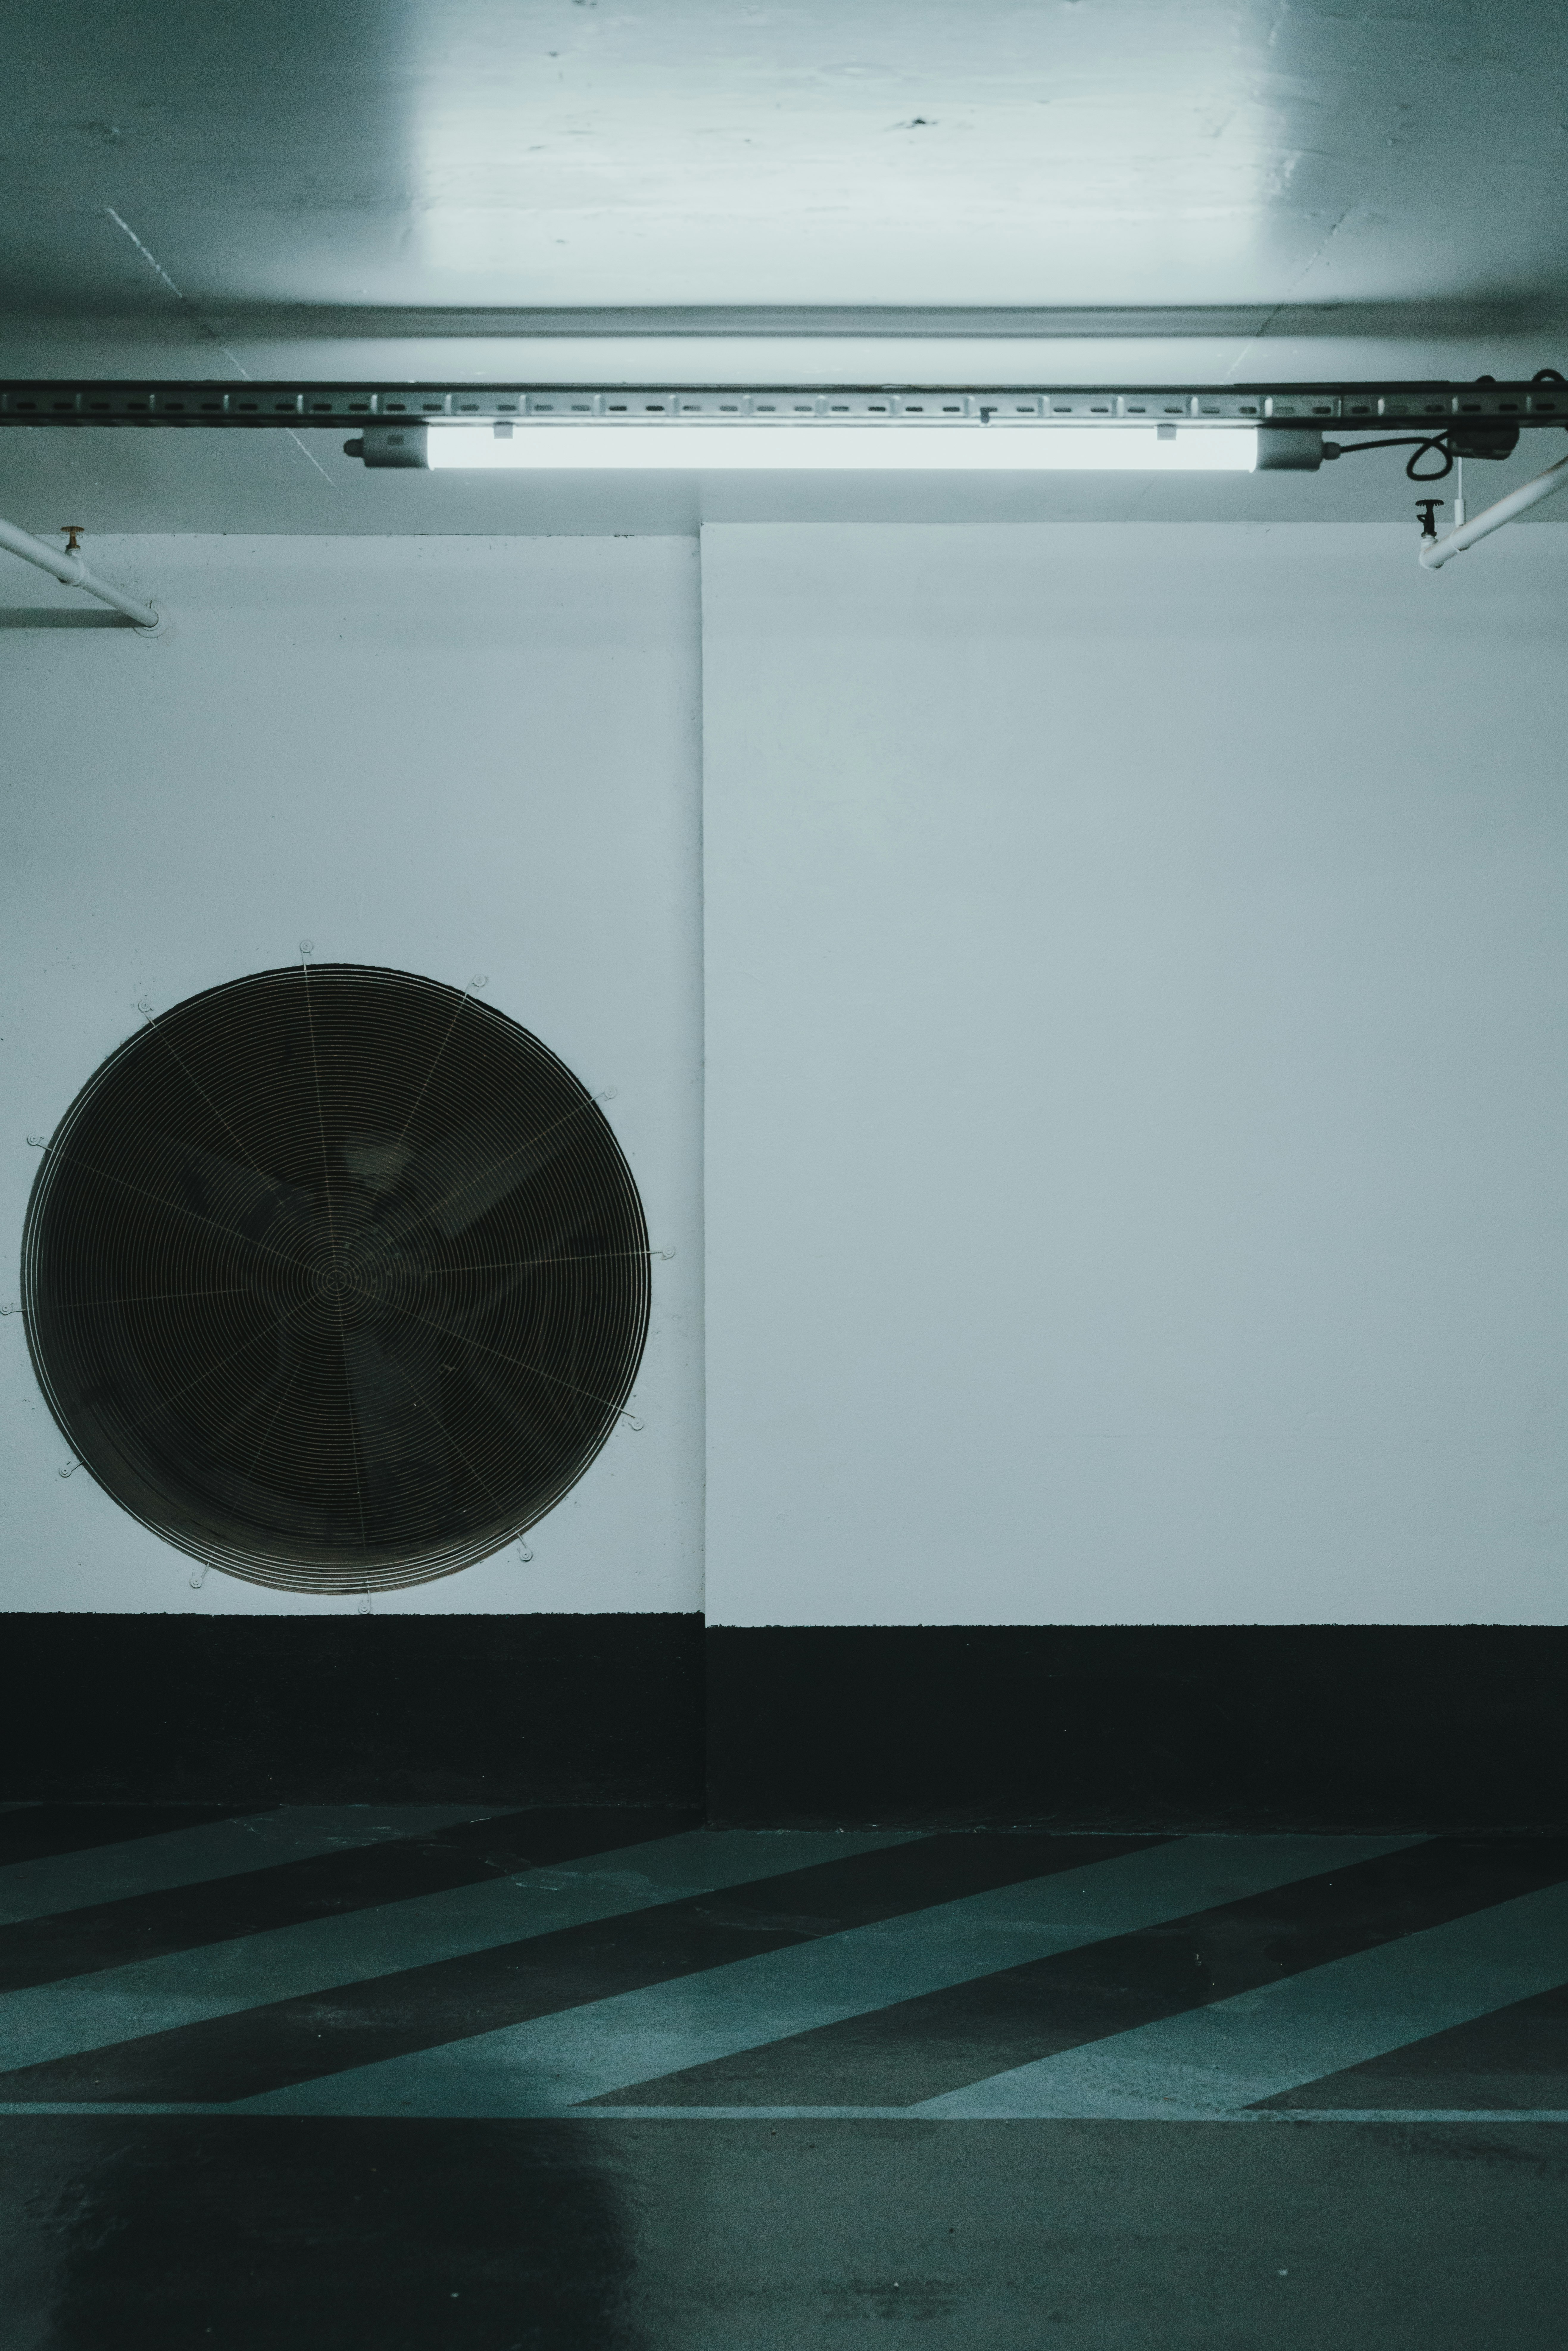 black round wall mounted fan